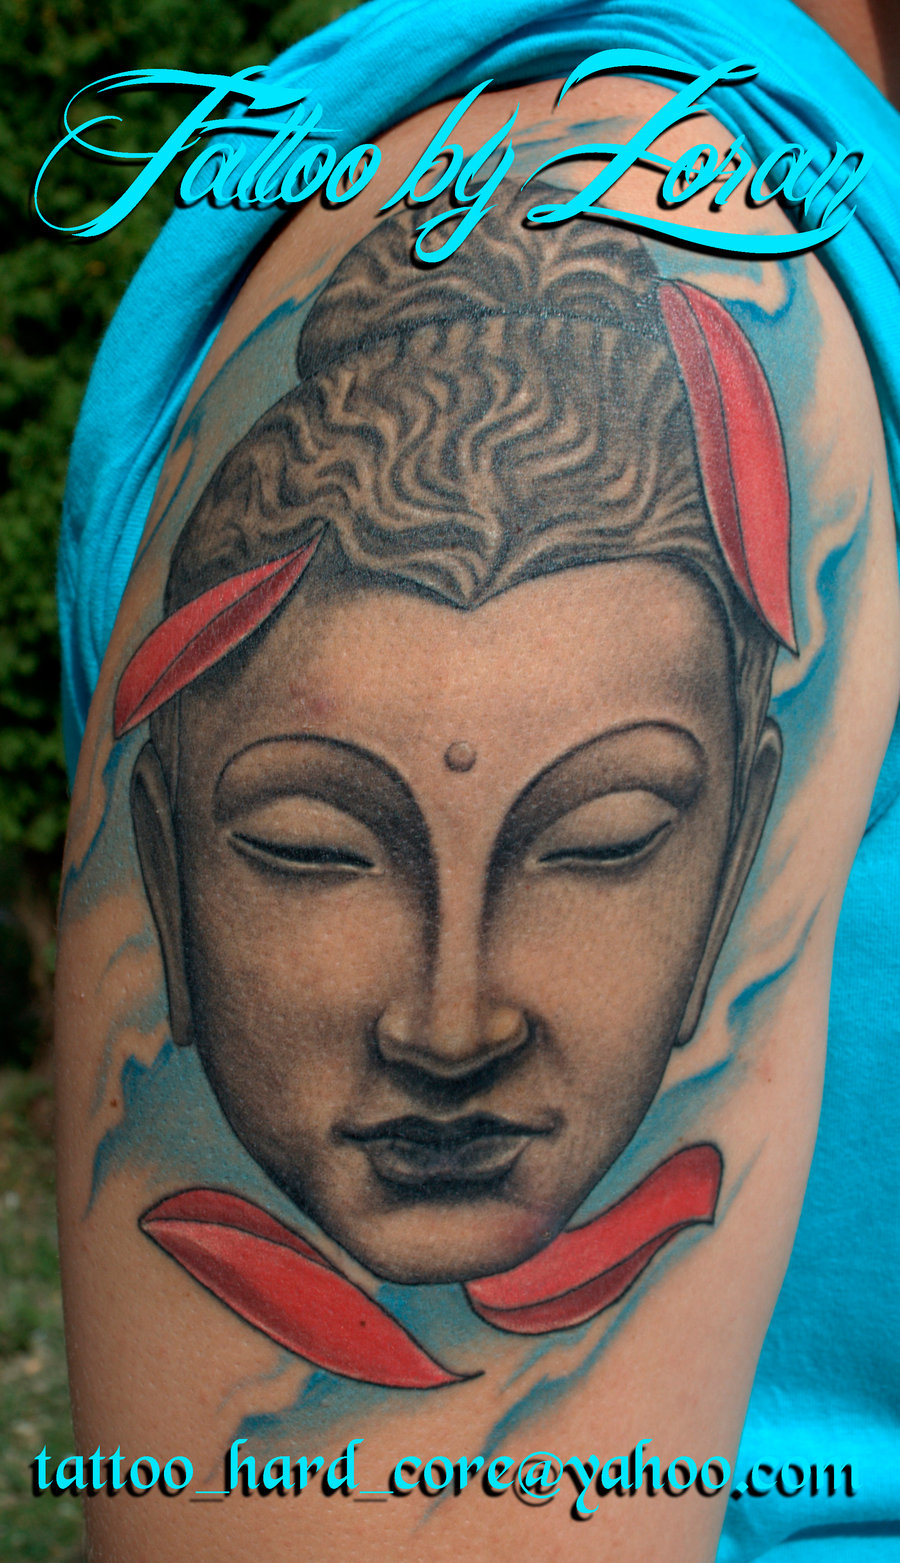 Fat Buddha Tattoos - Tattoos Facebook